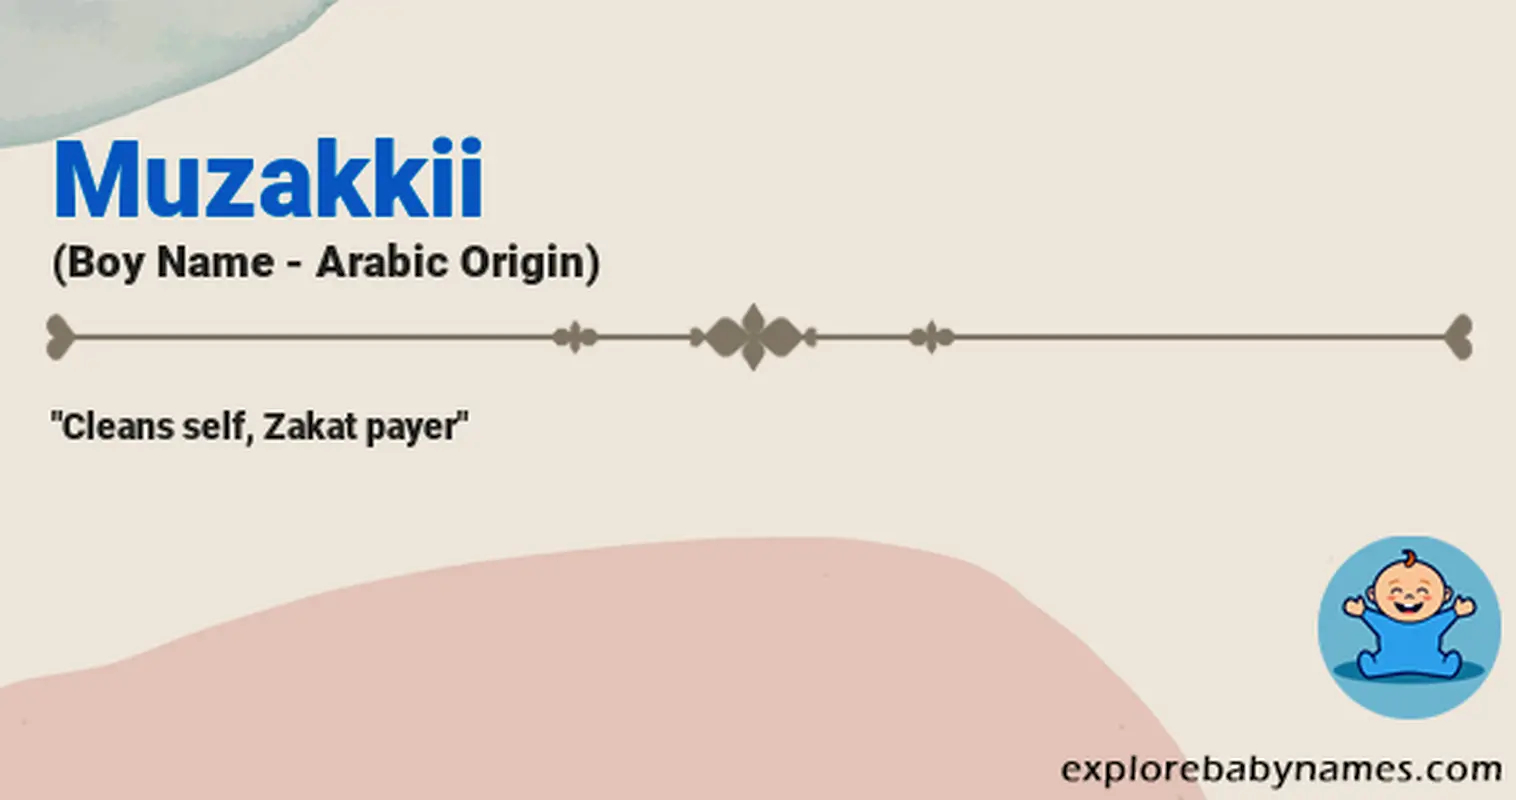 Meaning of Muzakkii